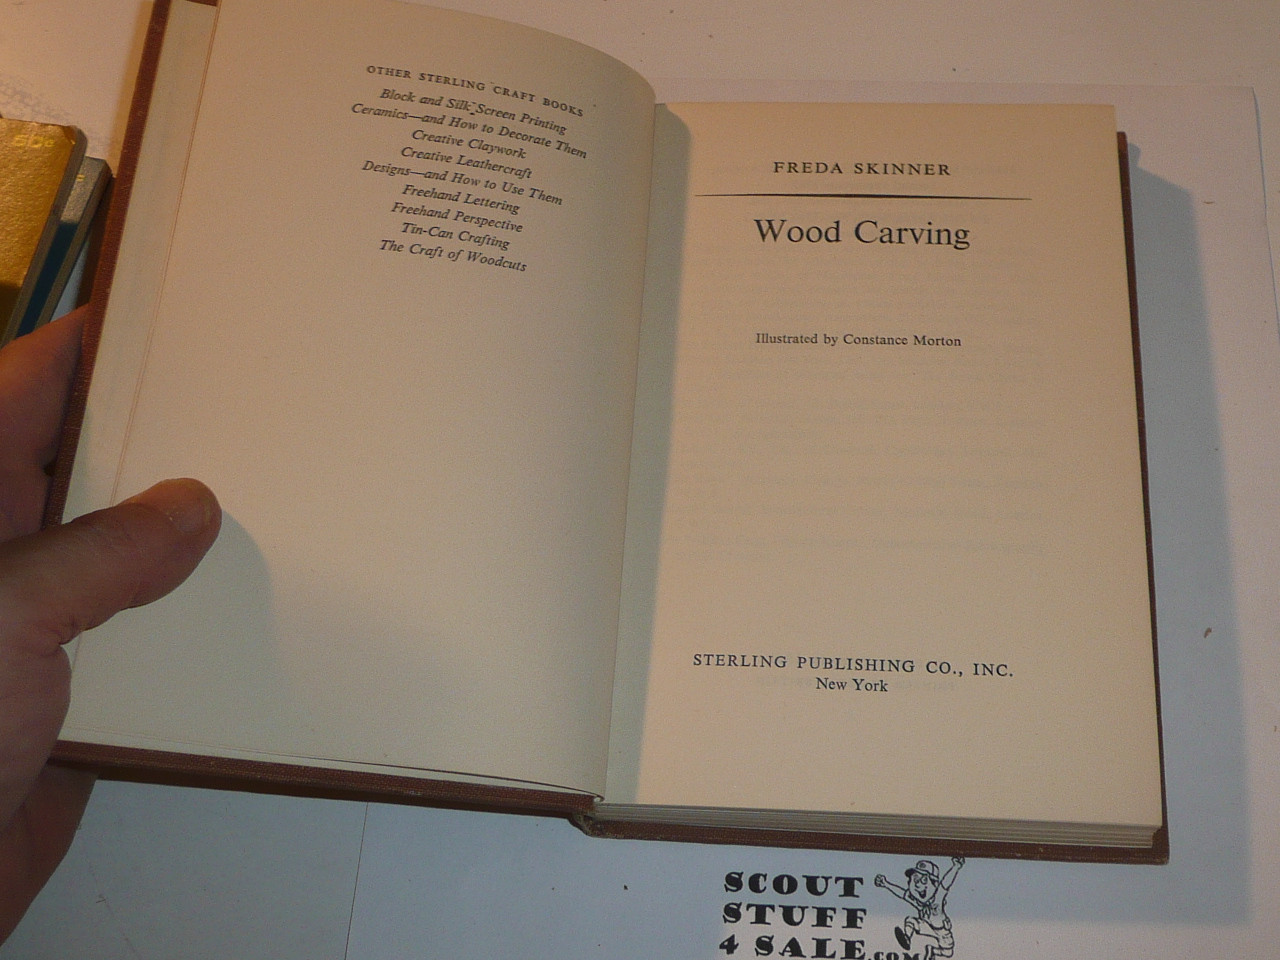 Wood Carving, by Freda Skinner, 1961 second printing